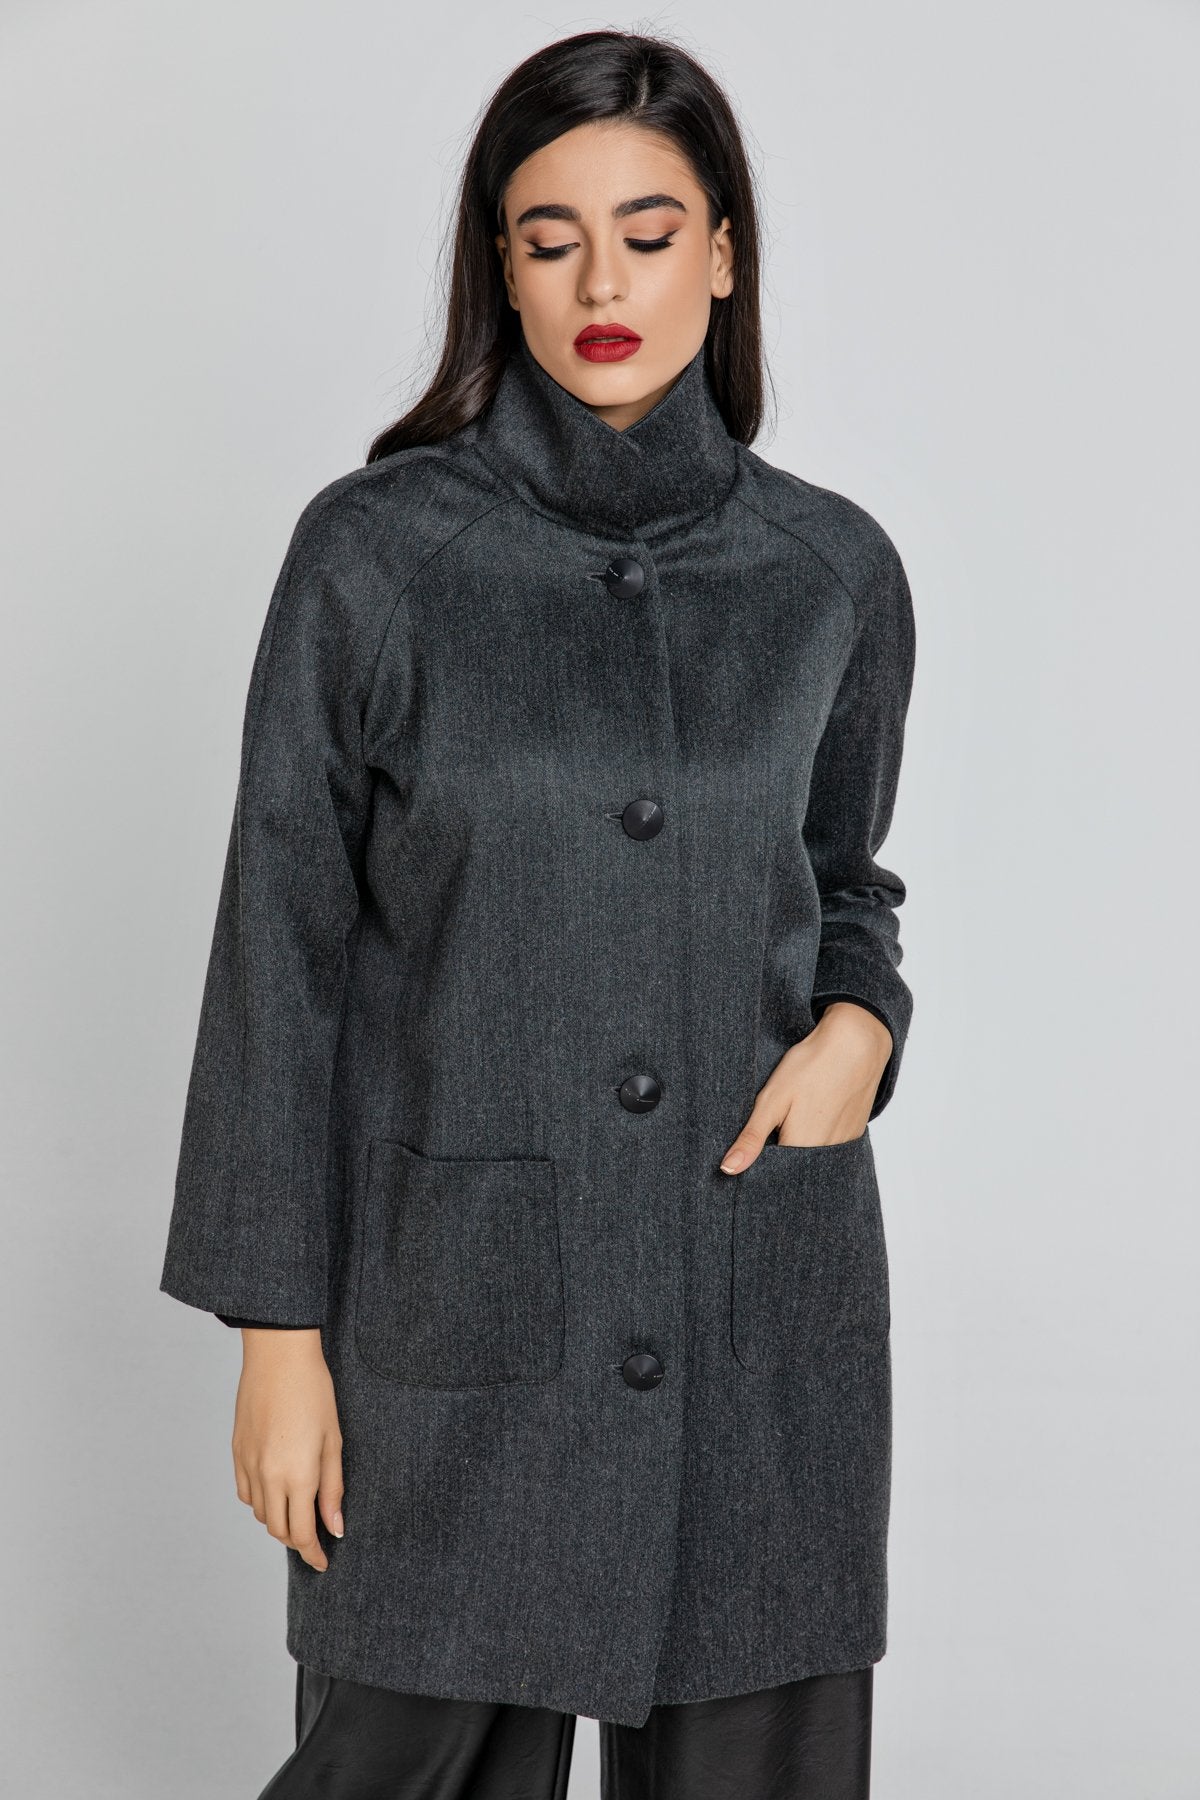 Wool Blend Dark Grey Coat by Conquista Fashion